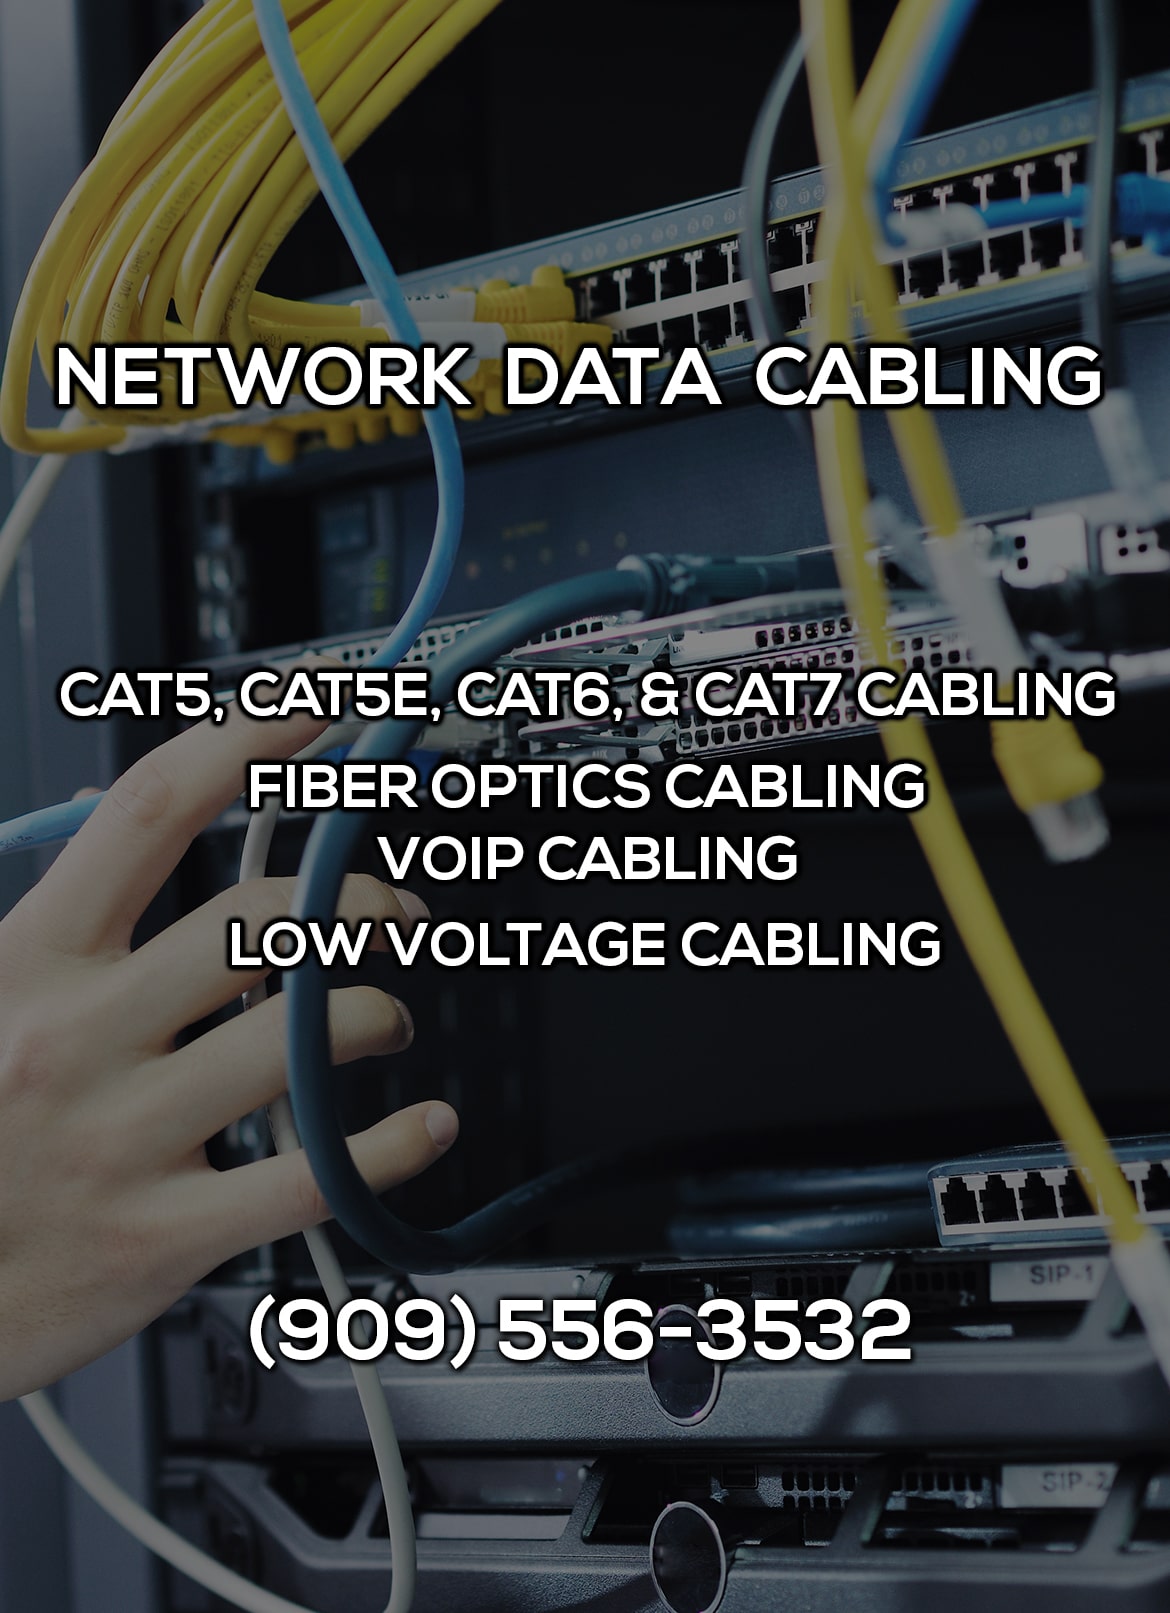 Network Data Cabling in Murrieta CA